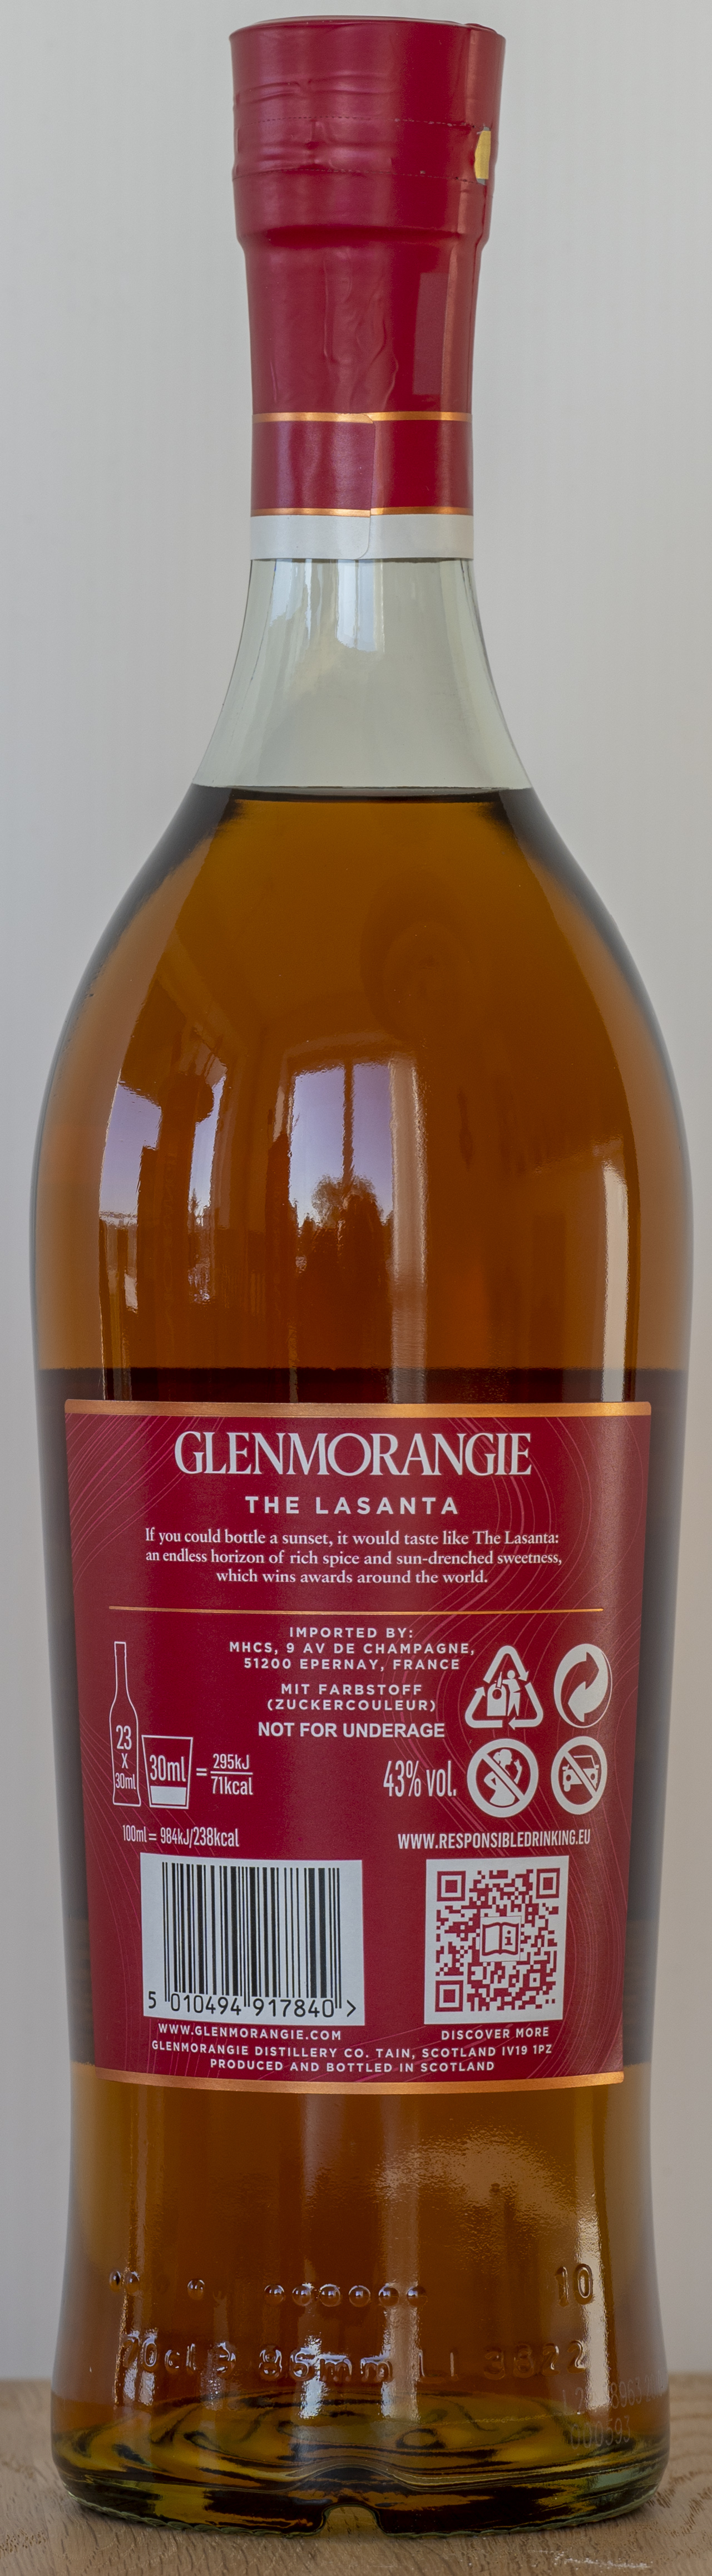 Billede: Z62_6456 - Glenmorangie 12 - bottle back.jpg